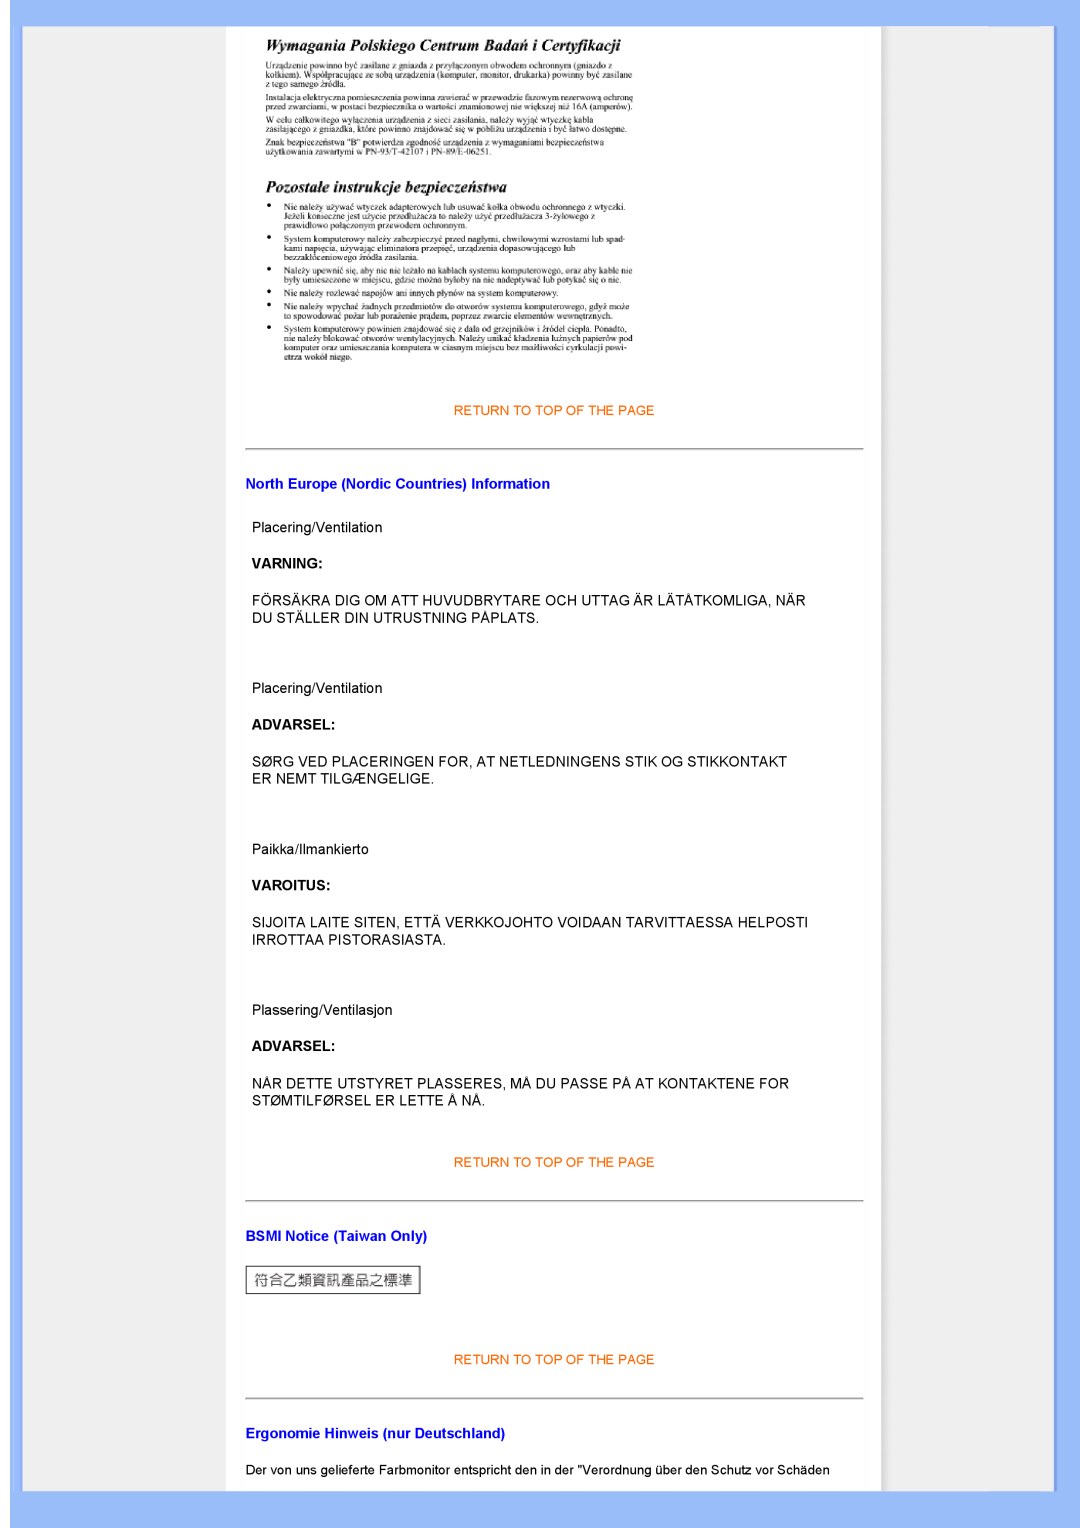 Univex 200BW8 user manual North Europe Nordic Countries Information, Varning, Advarsel, Varoitus, BSMI Notice Taiwan Only 